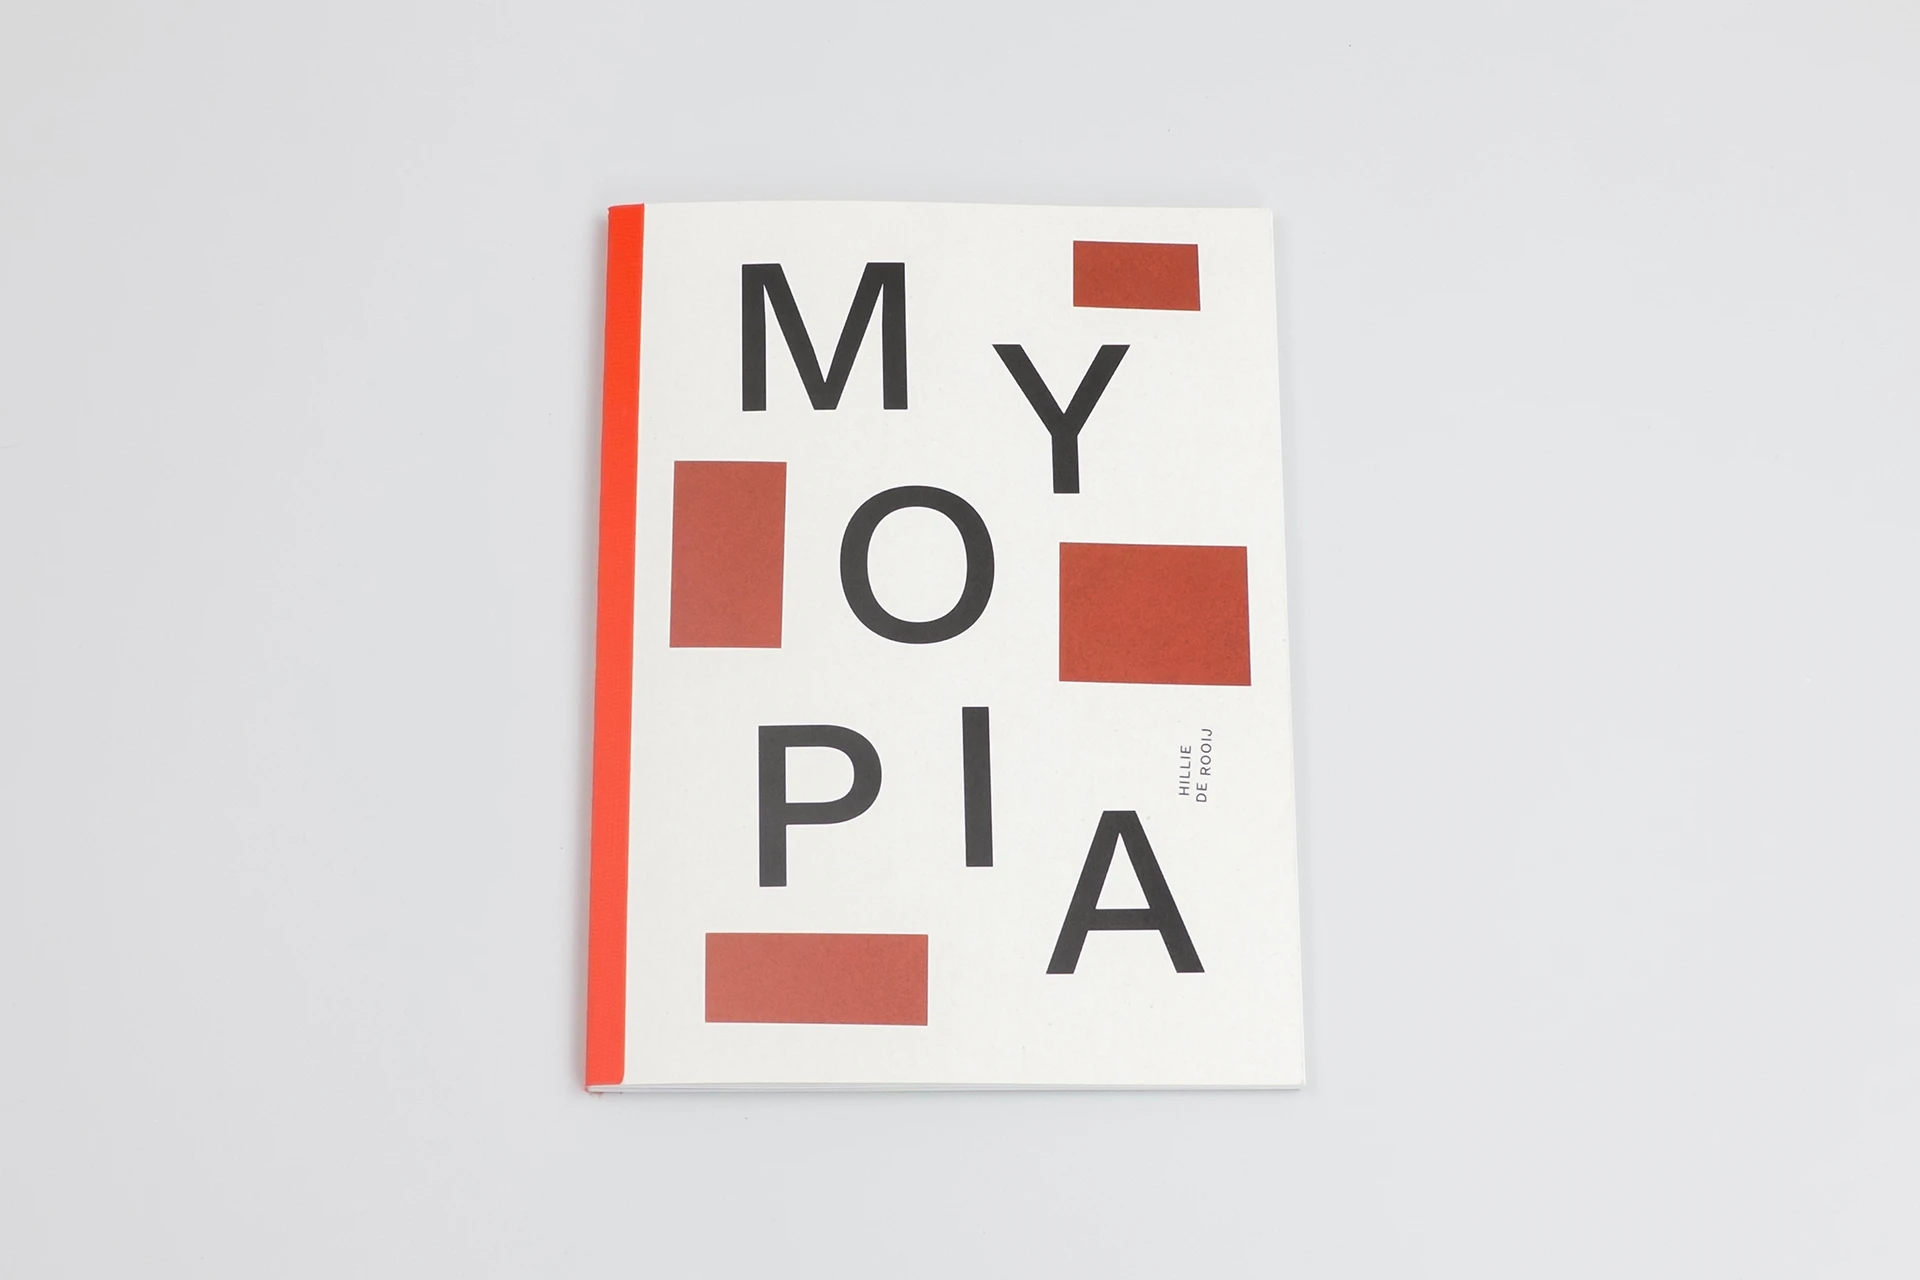 Myopia - The Eriskay Connection